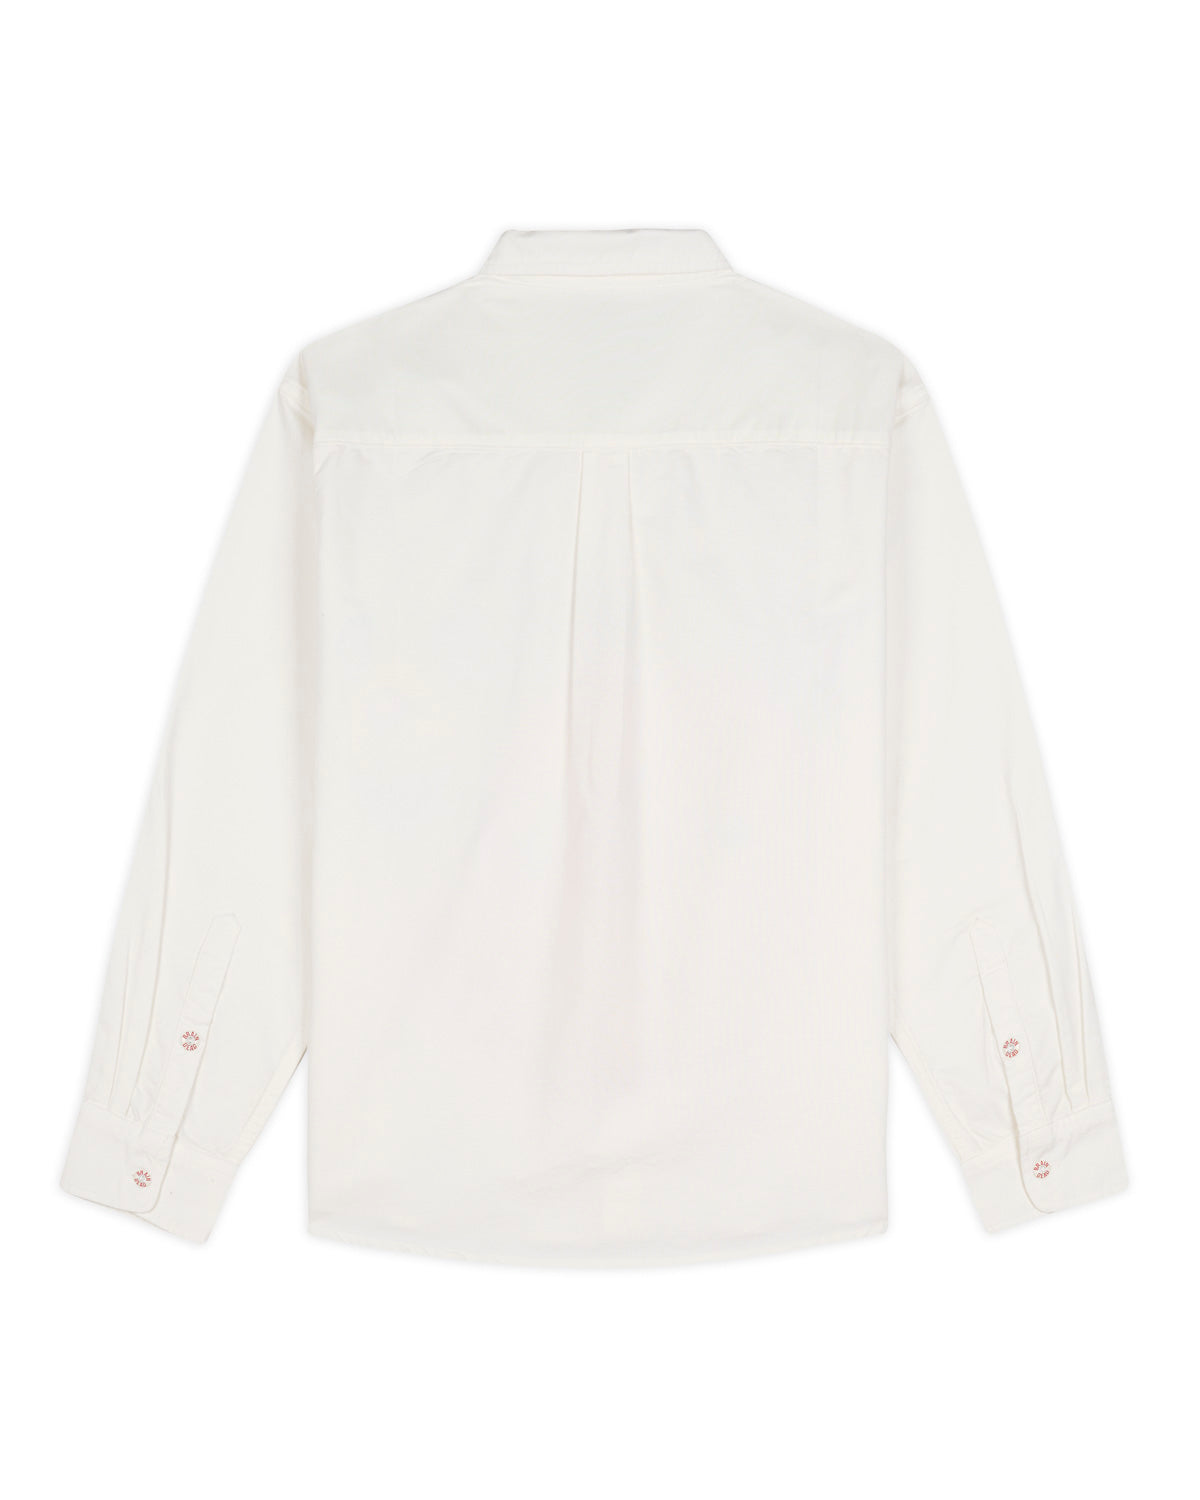 Gaspar Bad Apple Long Sleeve Button Up - White 2